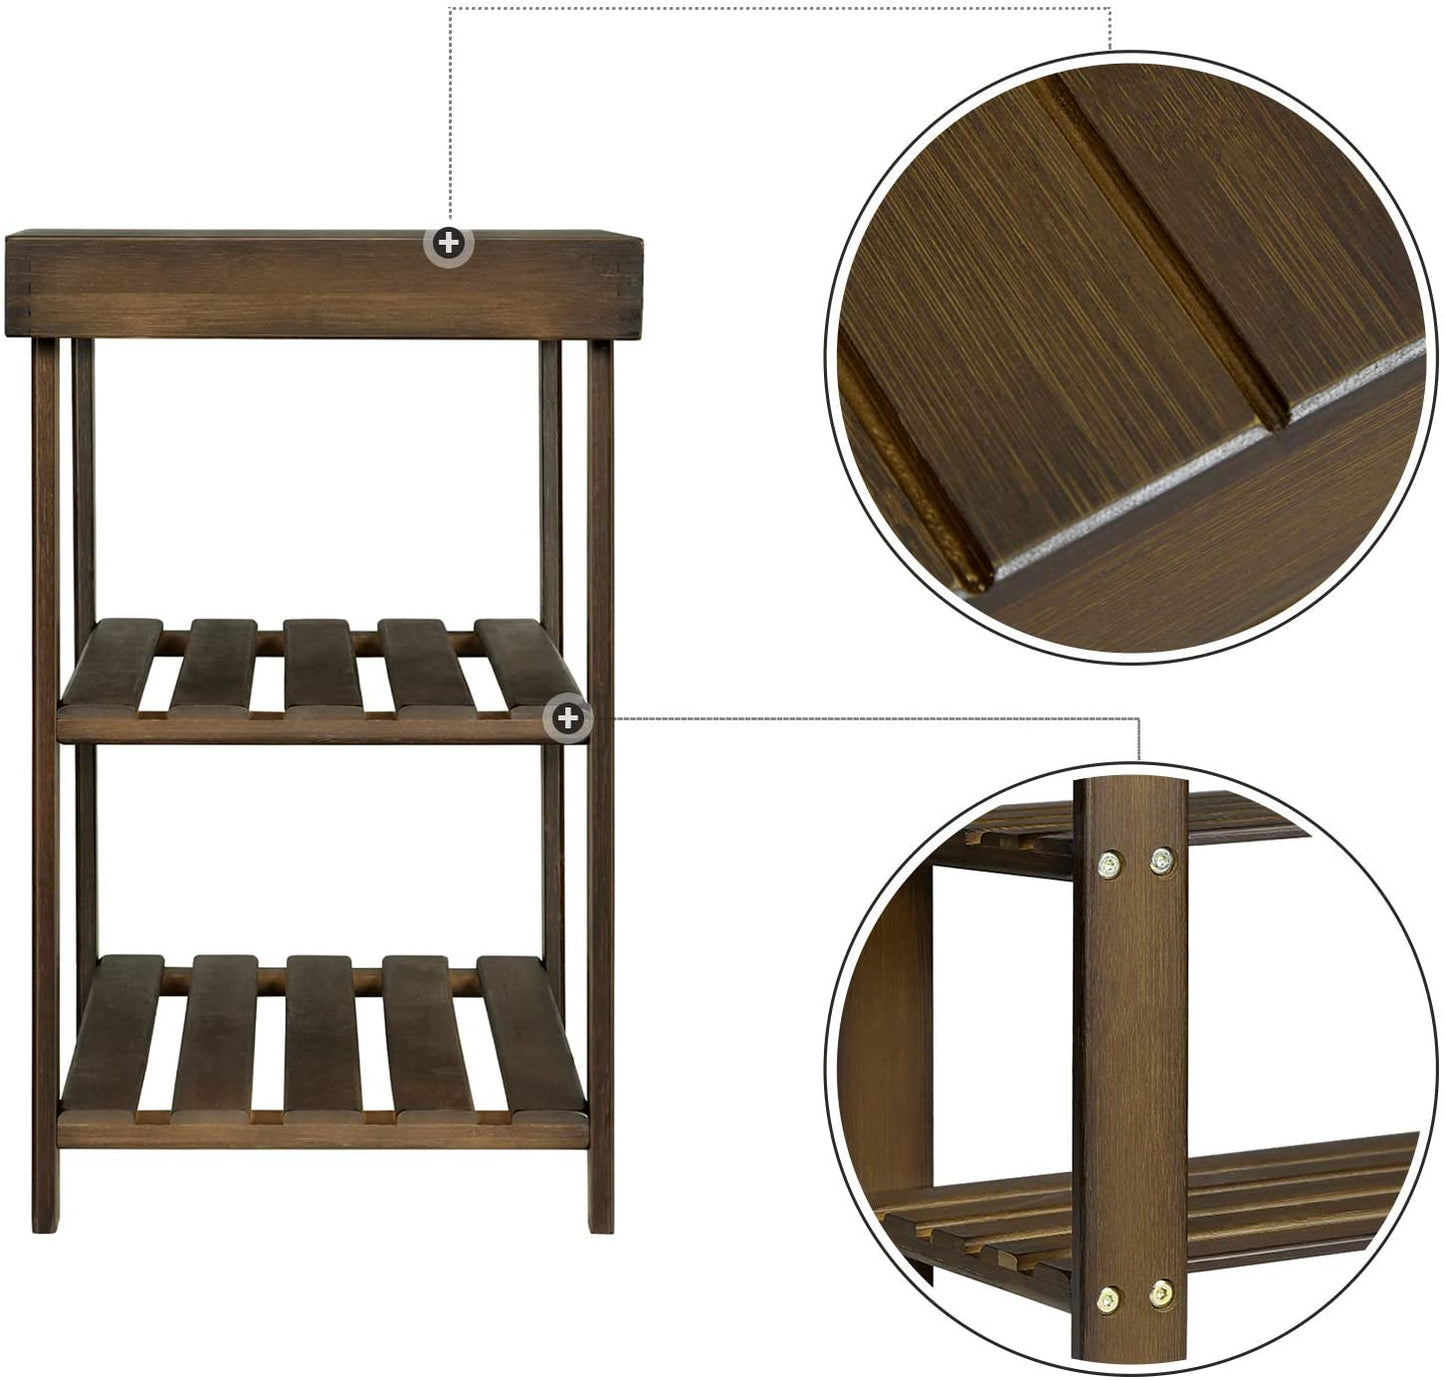 Benches : Shoe Rack Bench,3-Tier Bamboo Shoe Organizer,Storage Shelf Holds